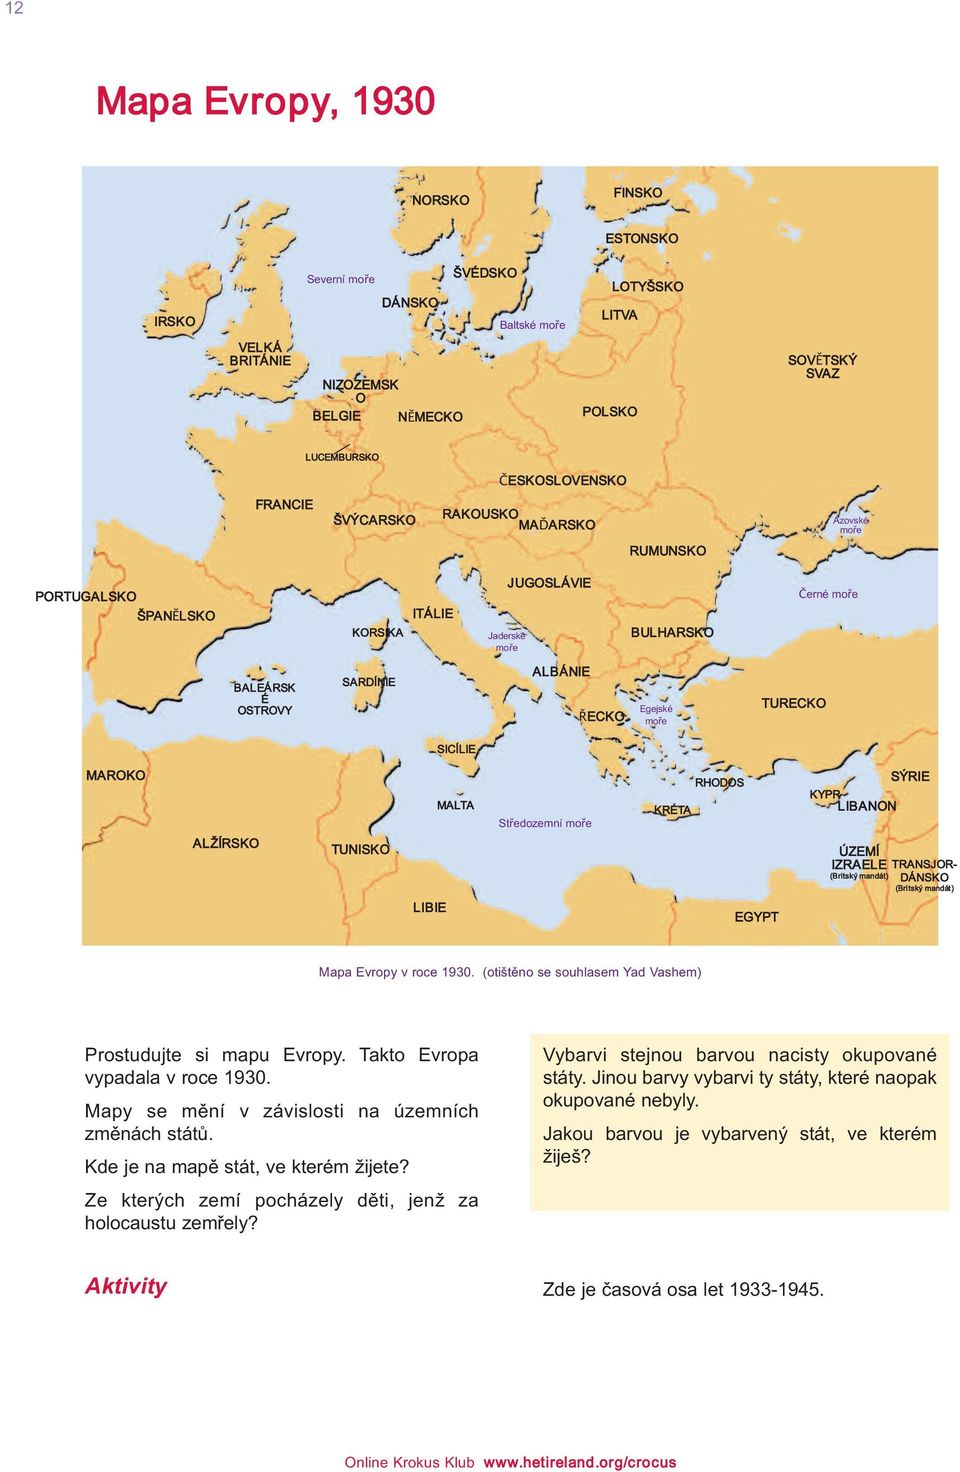 TURECKO SICÍLIE MAROKO ALŽÍRSKO TUNISKO MALTA Středozemní moře KRéTA RHODOS KYPR LIBANON ÚZEMÍ IZRAELE (Britský mandát) SýRIE TRANSJOR- DÁNSKO (Britský mandát) LIBIE EGYPT Mapa Evropy v roce 1930.